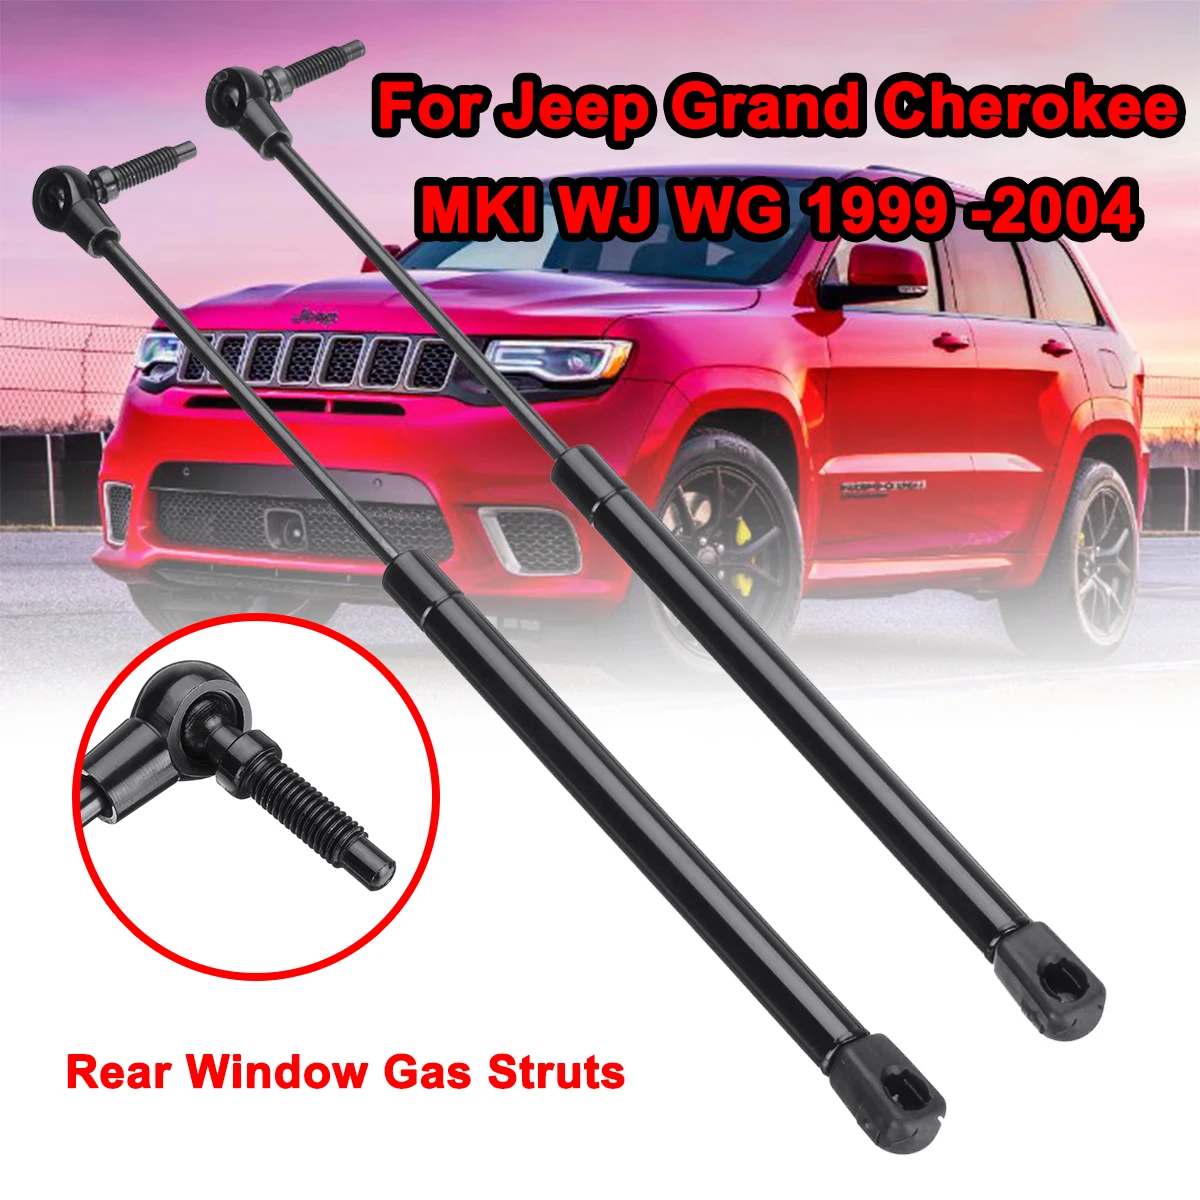 

2pcs Car Rear Window Boot Gas Support Struts Bars Replace For Jeep Grand Cherokee MKI WJ WG 1999-2004 55136761AA 55136965AA